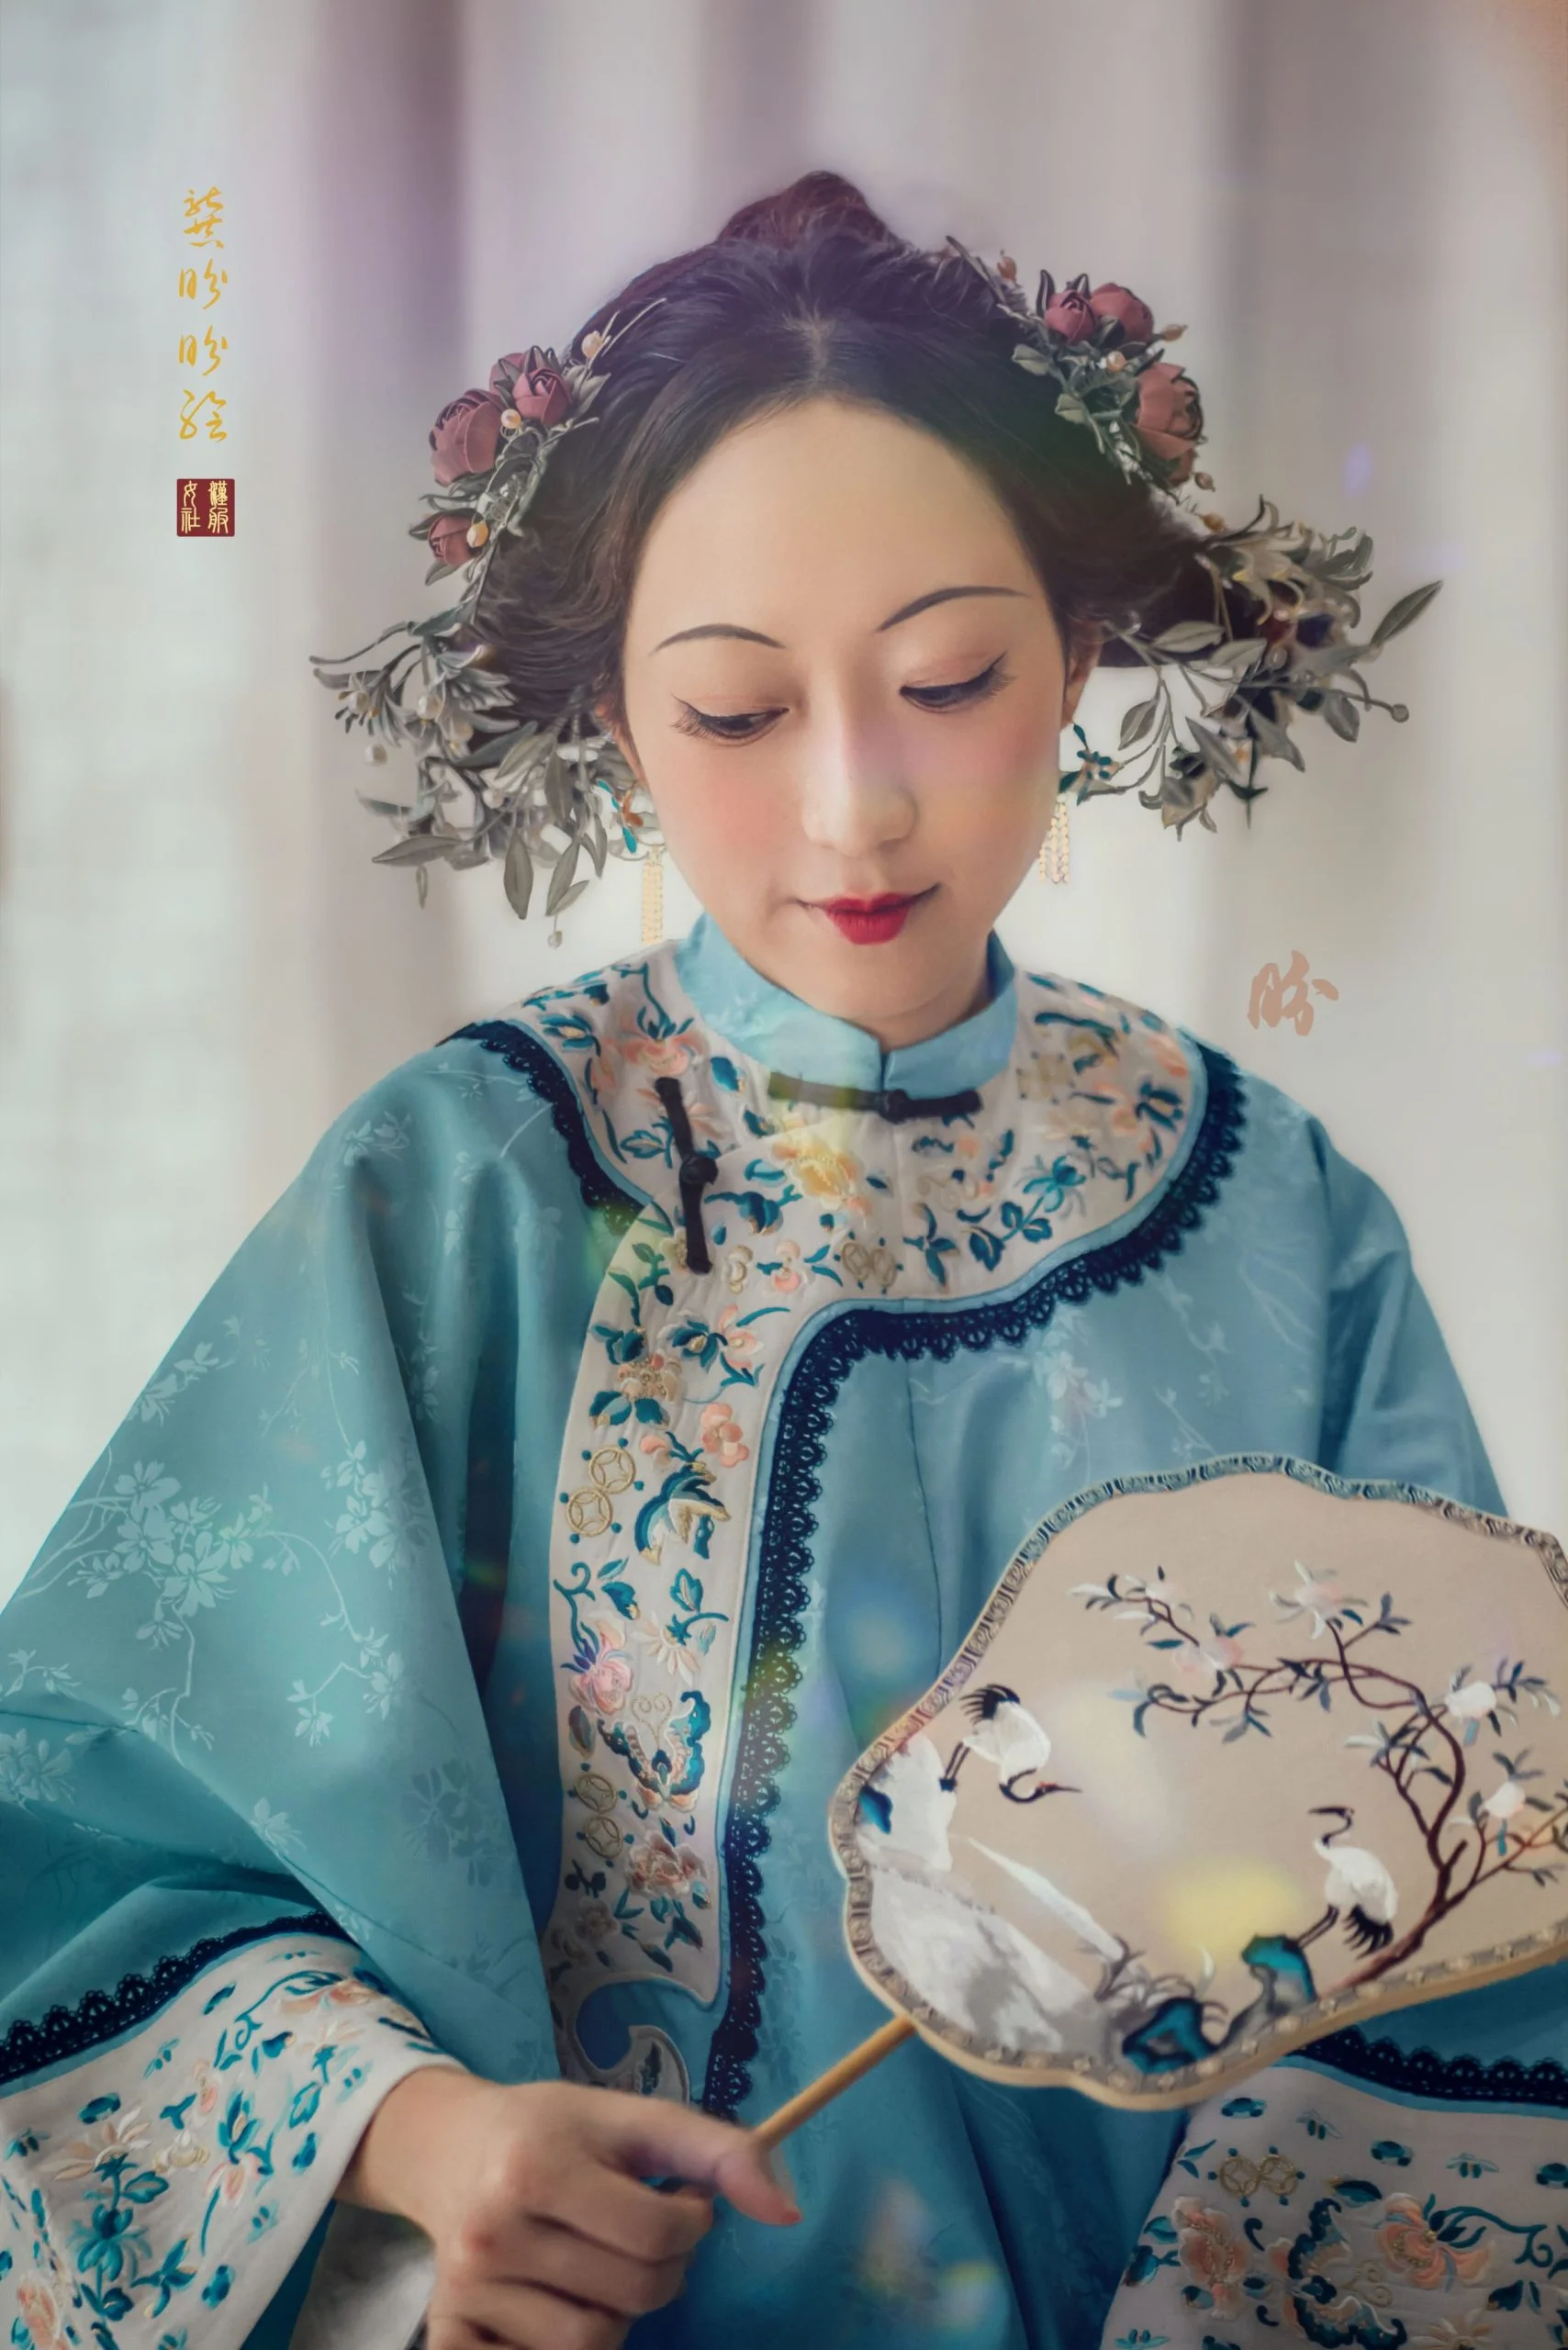 Courtesans – China’s Earliest Poster Girls